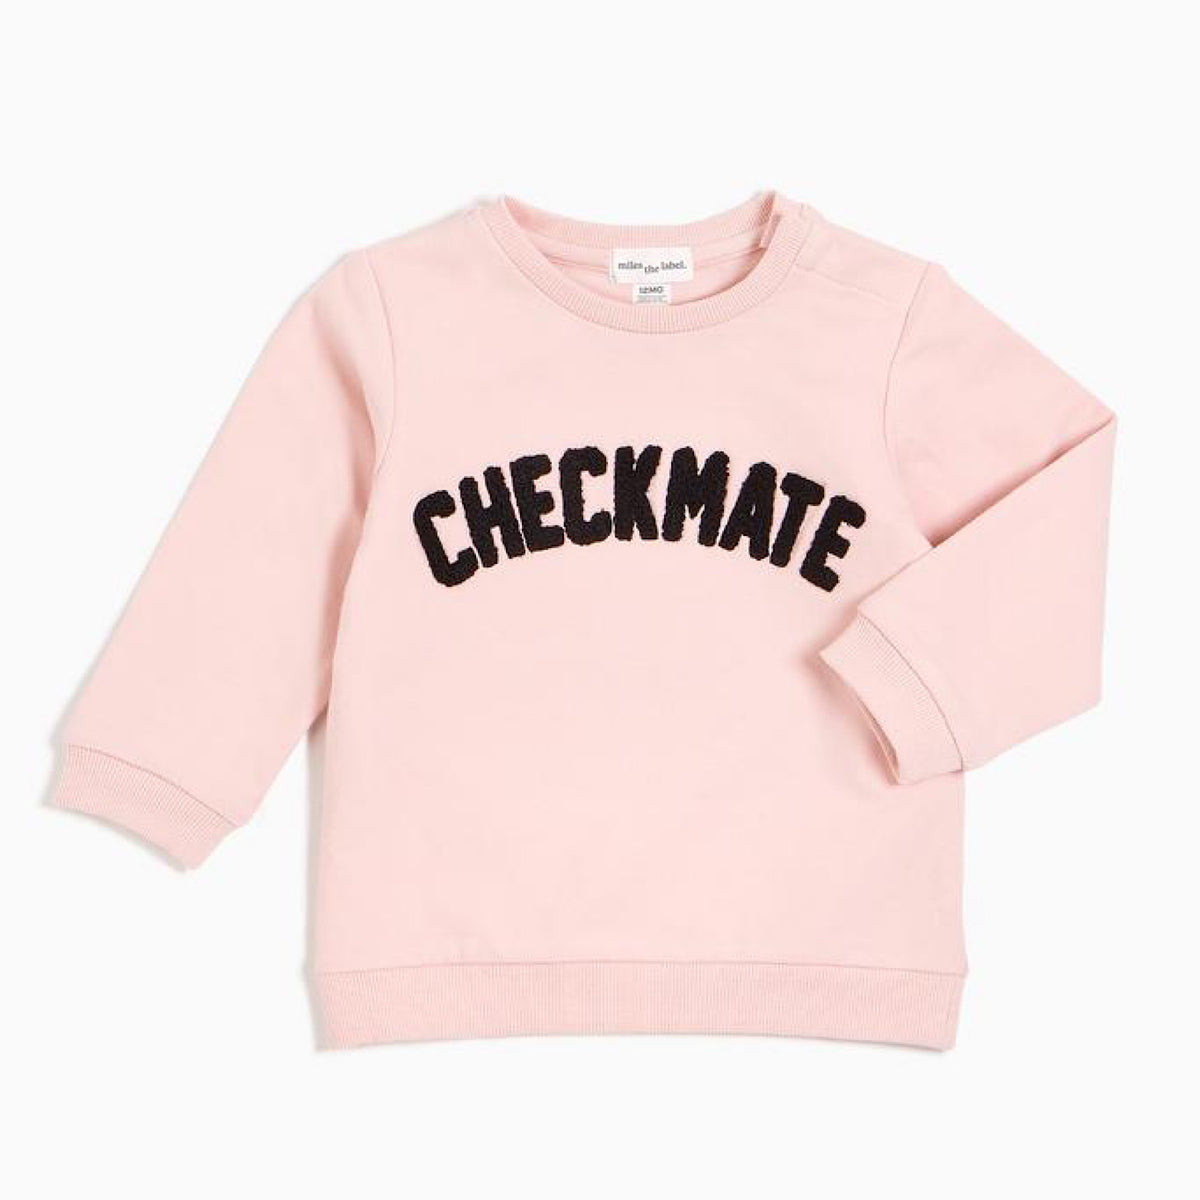 Checkmate Sweatshirt, Pink